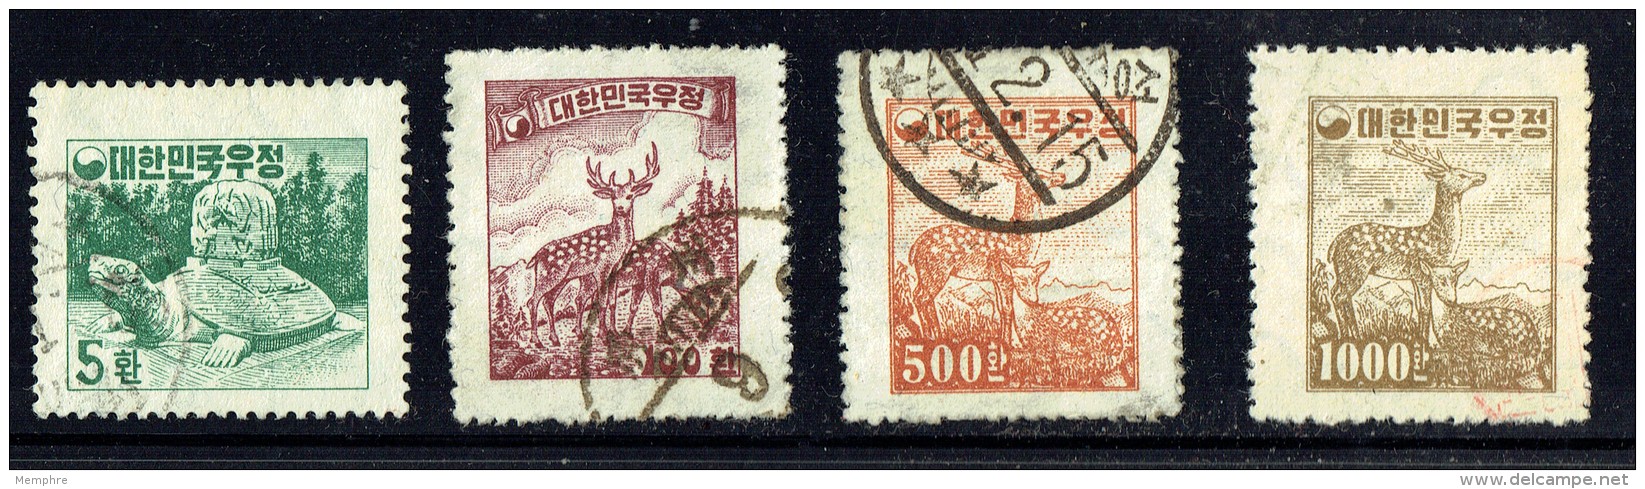 1954  New Definitives  Sc 196-9  Used - Corée Du Sud